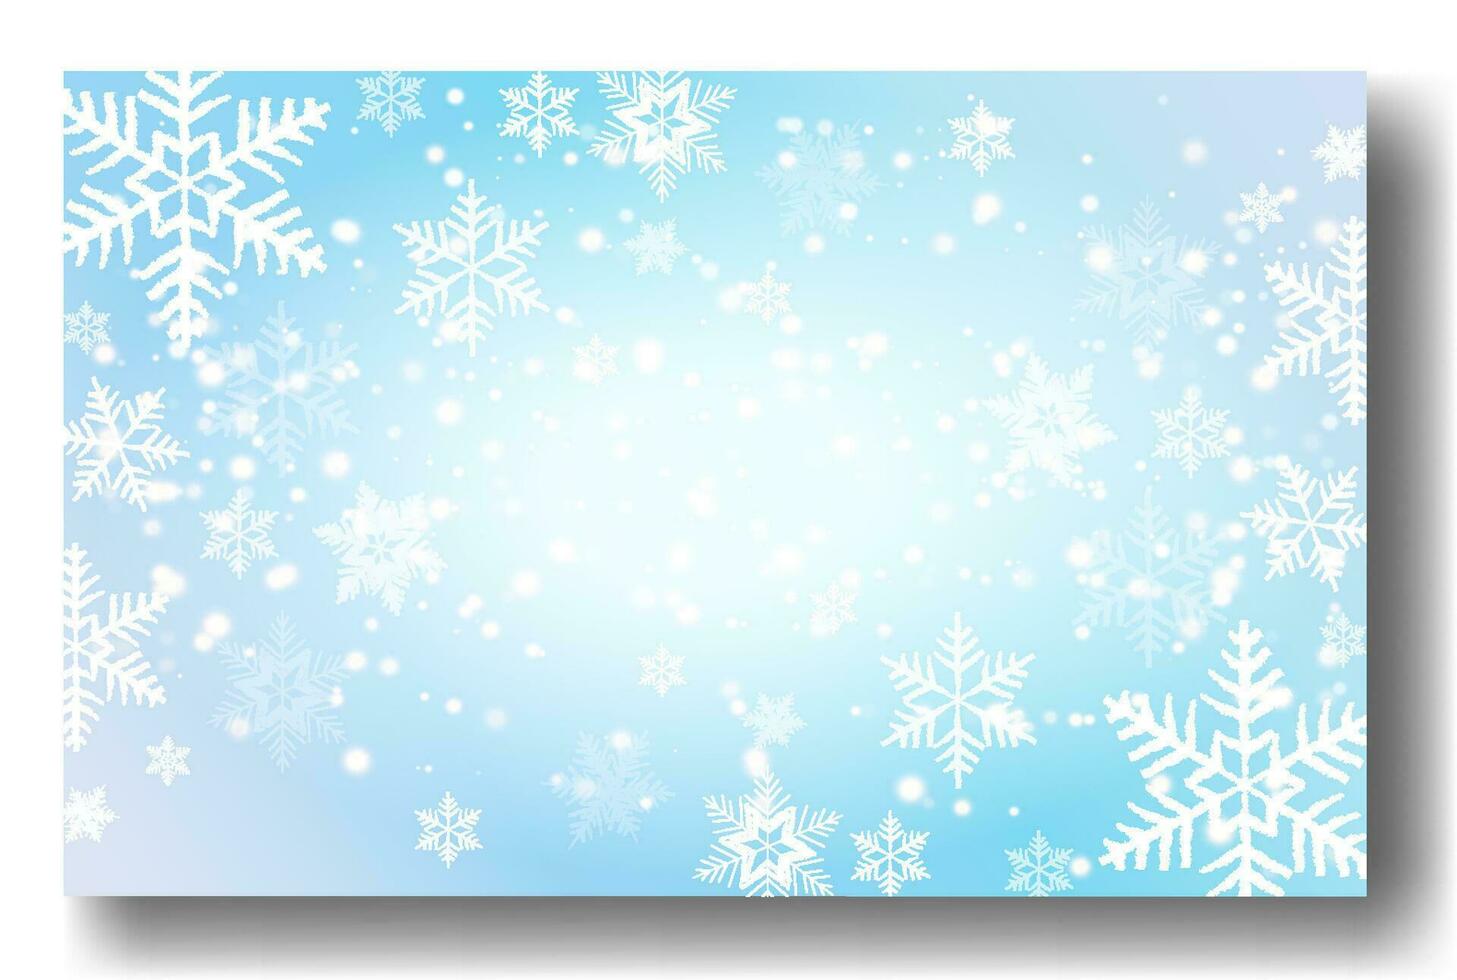 Cute falling snow flakes illustration. Wintertime speck frozen granules. Snowfall sky white teal blue wallpaper. Scattered snowflakes december theme. Snow hurricane landscape vector